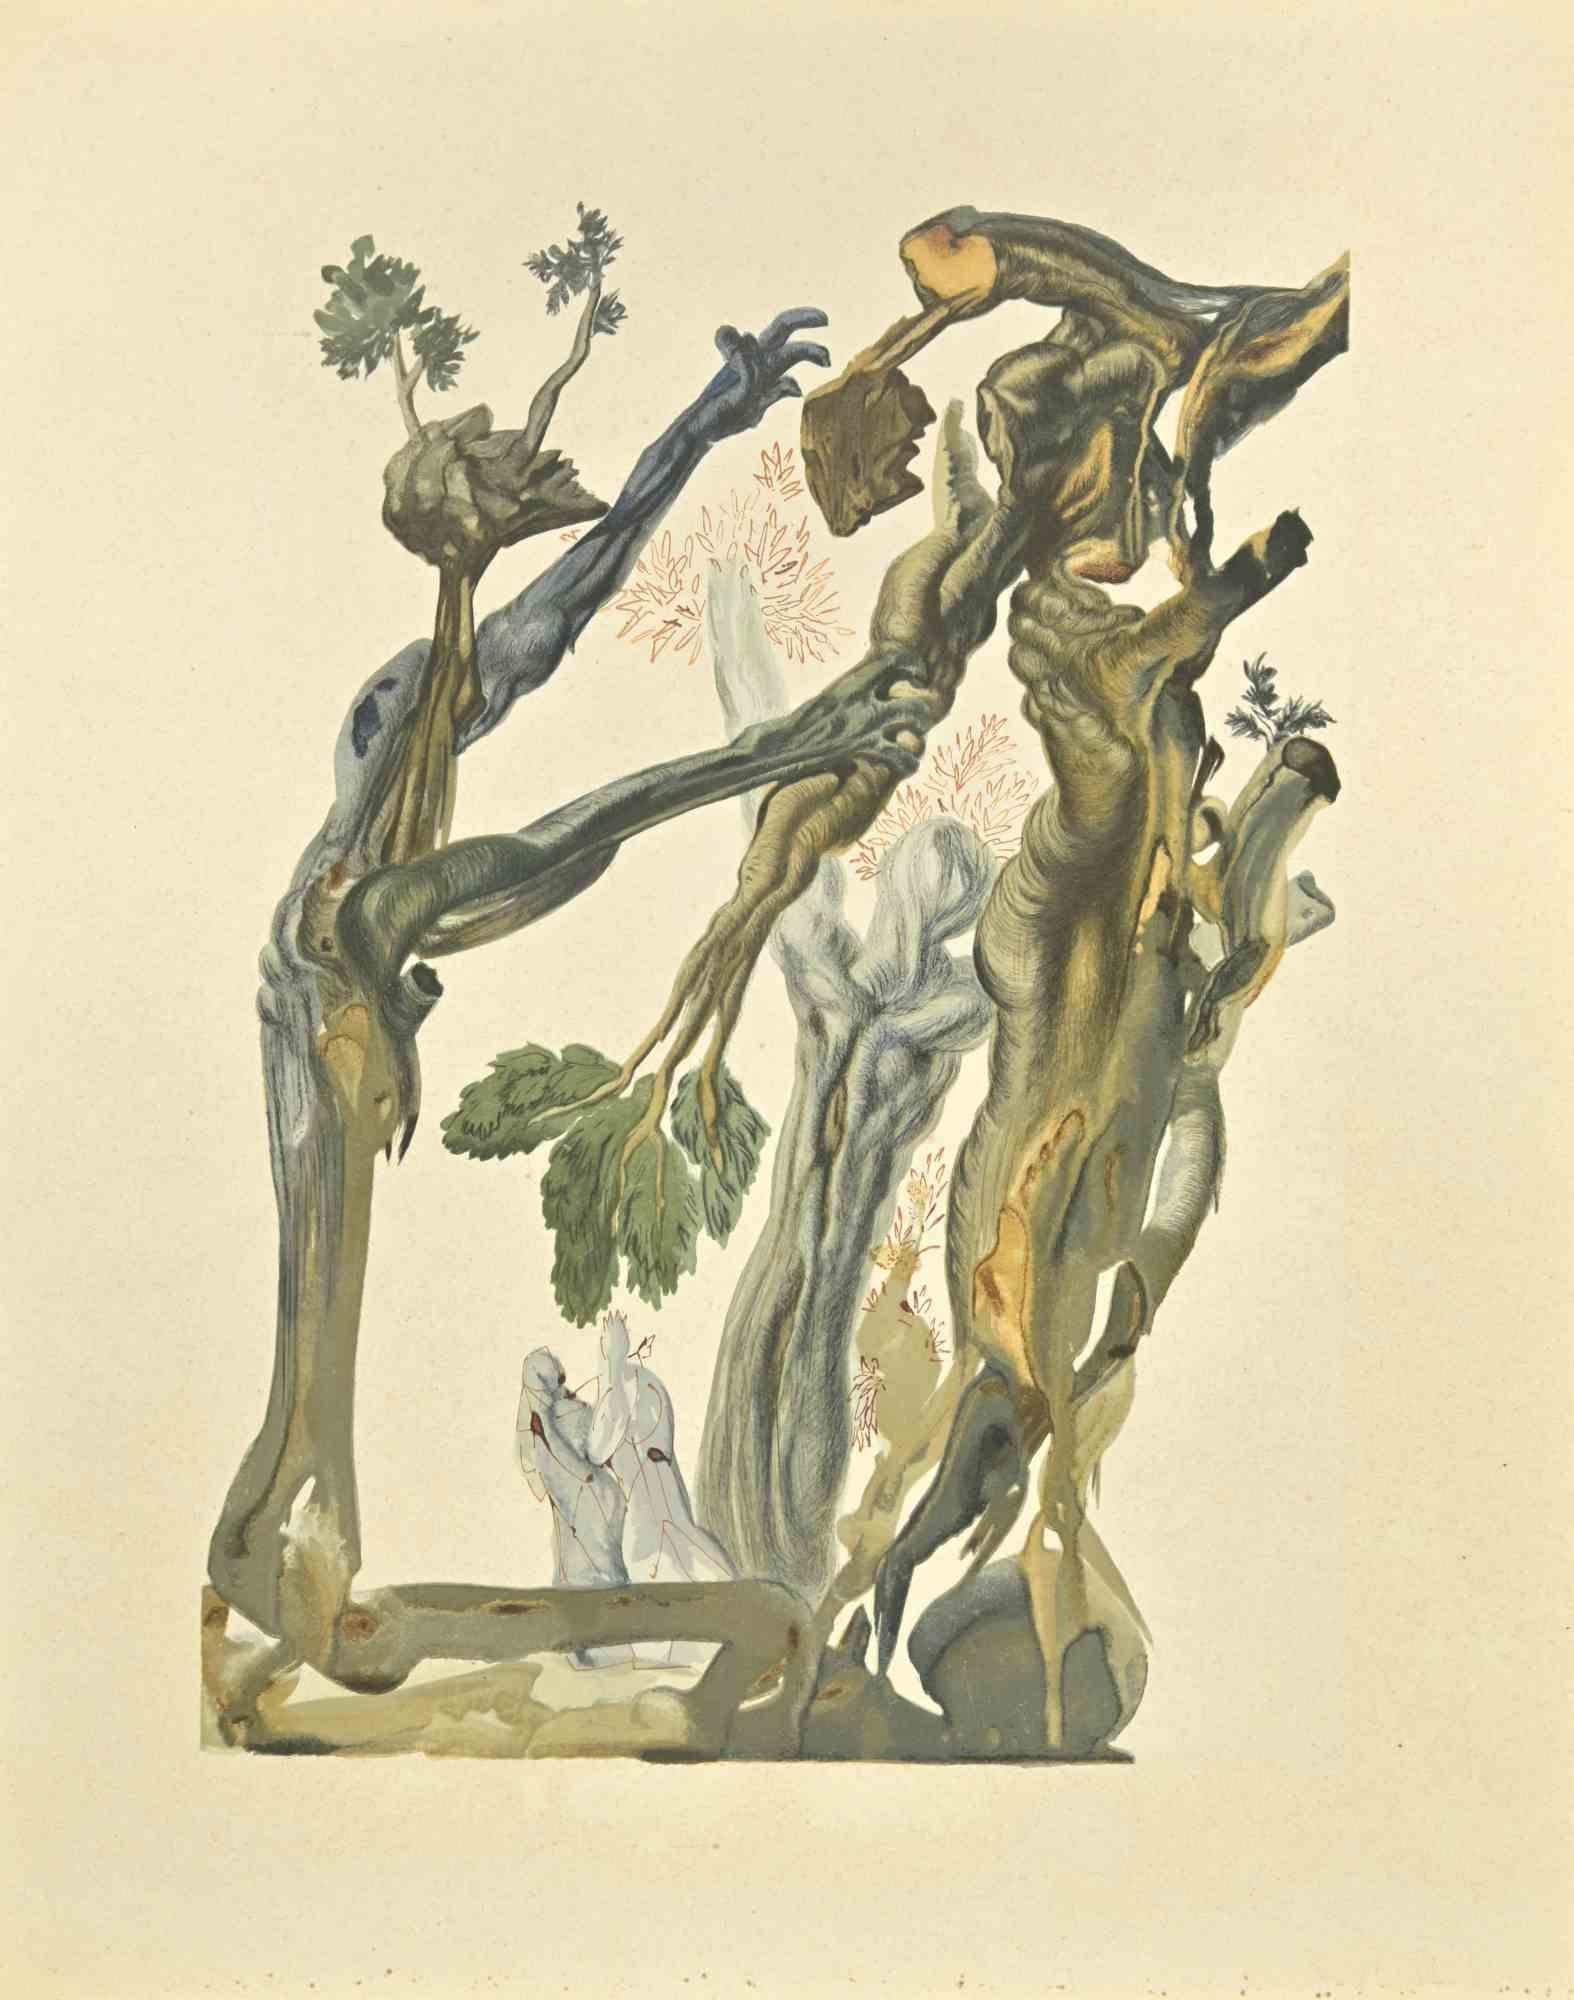 Salvador Dalí Figurative Print - Forest of Suicides - Woodcut  - 1963